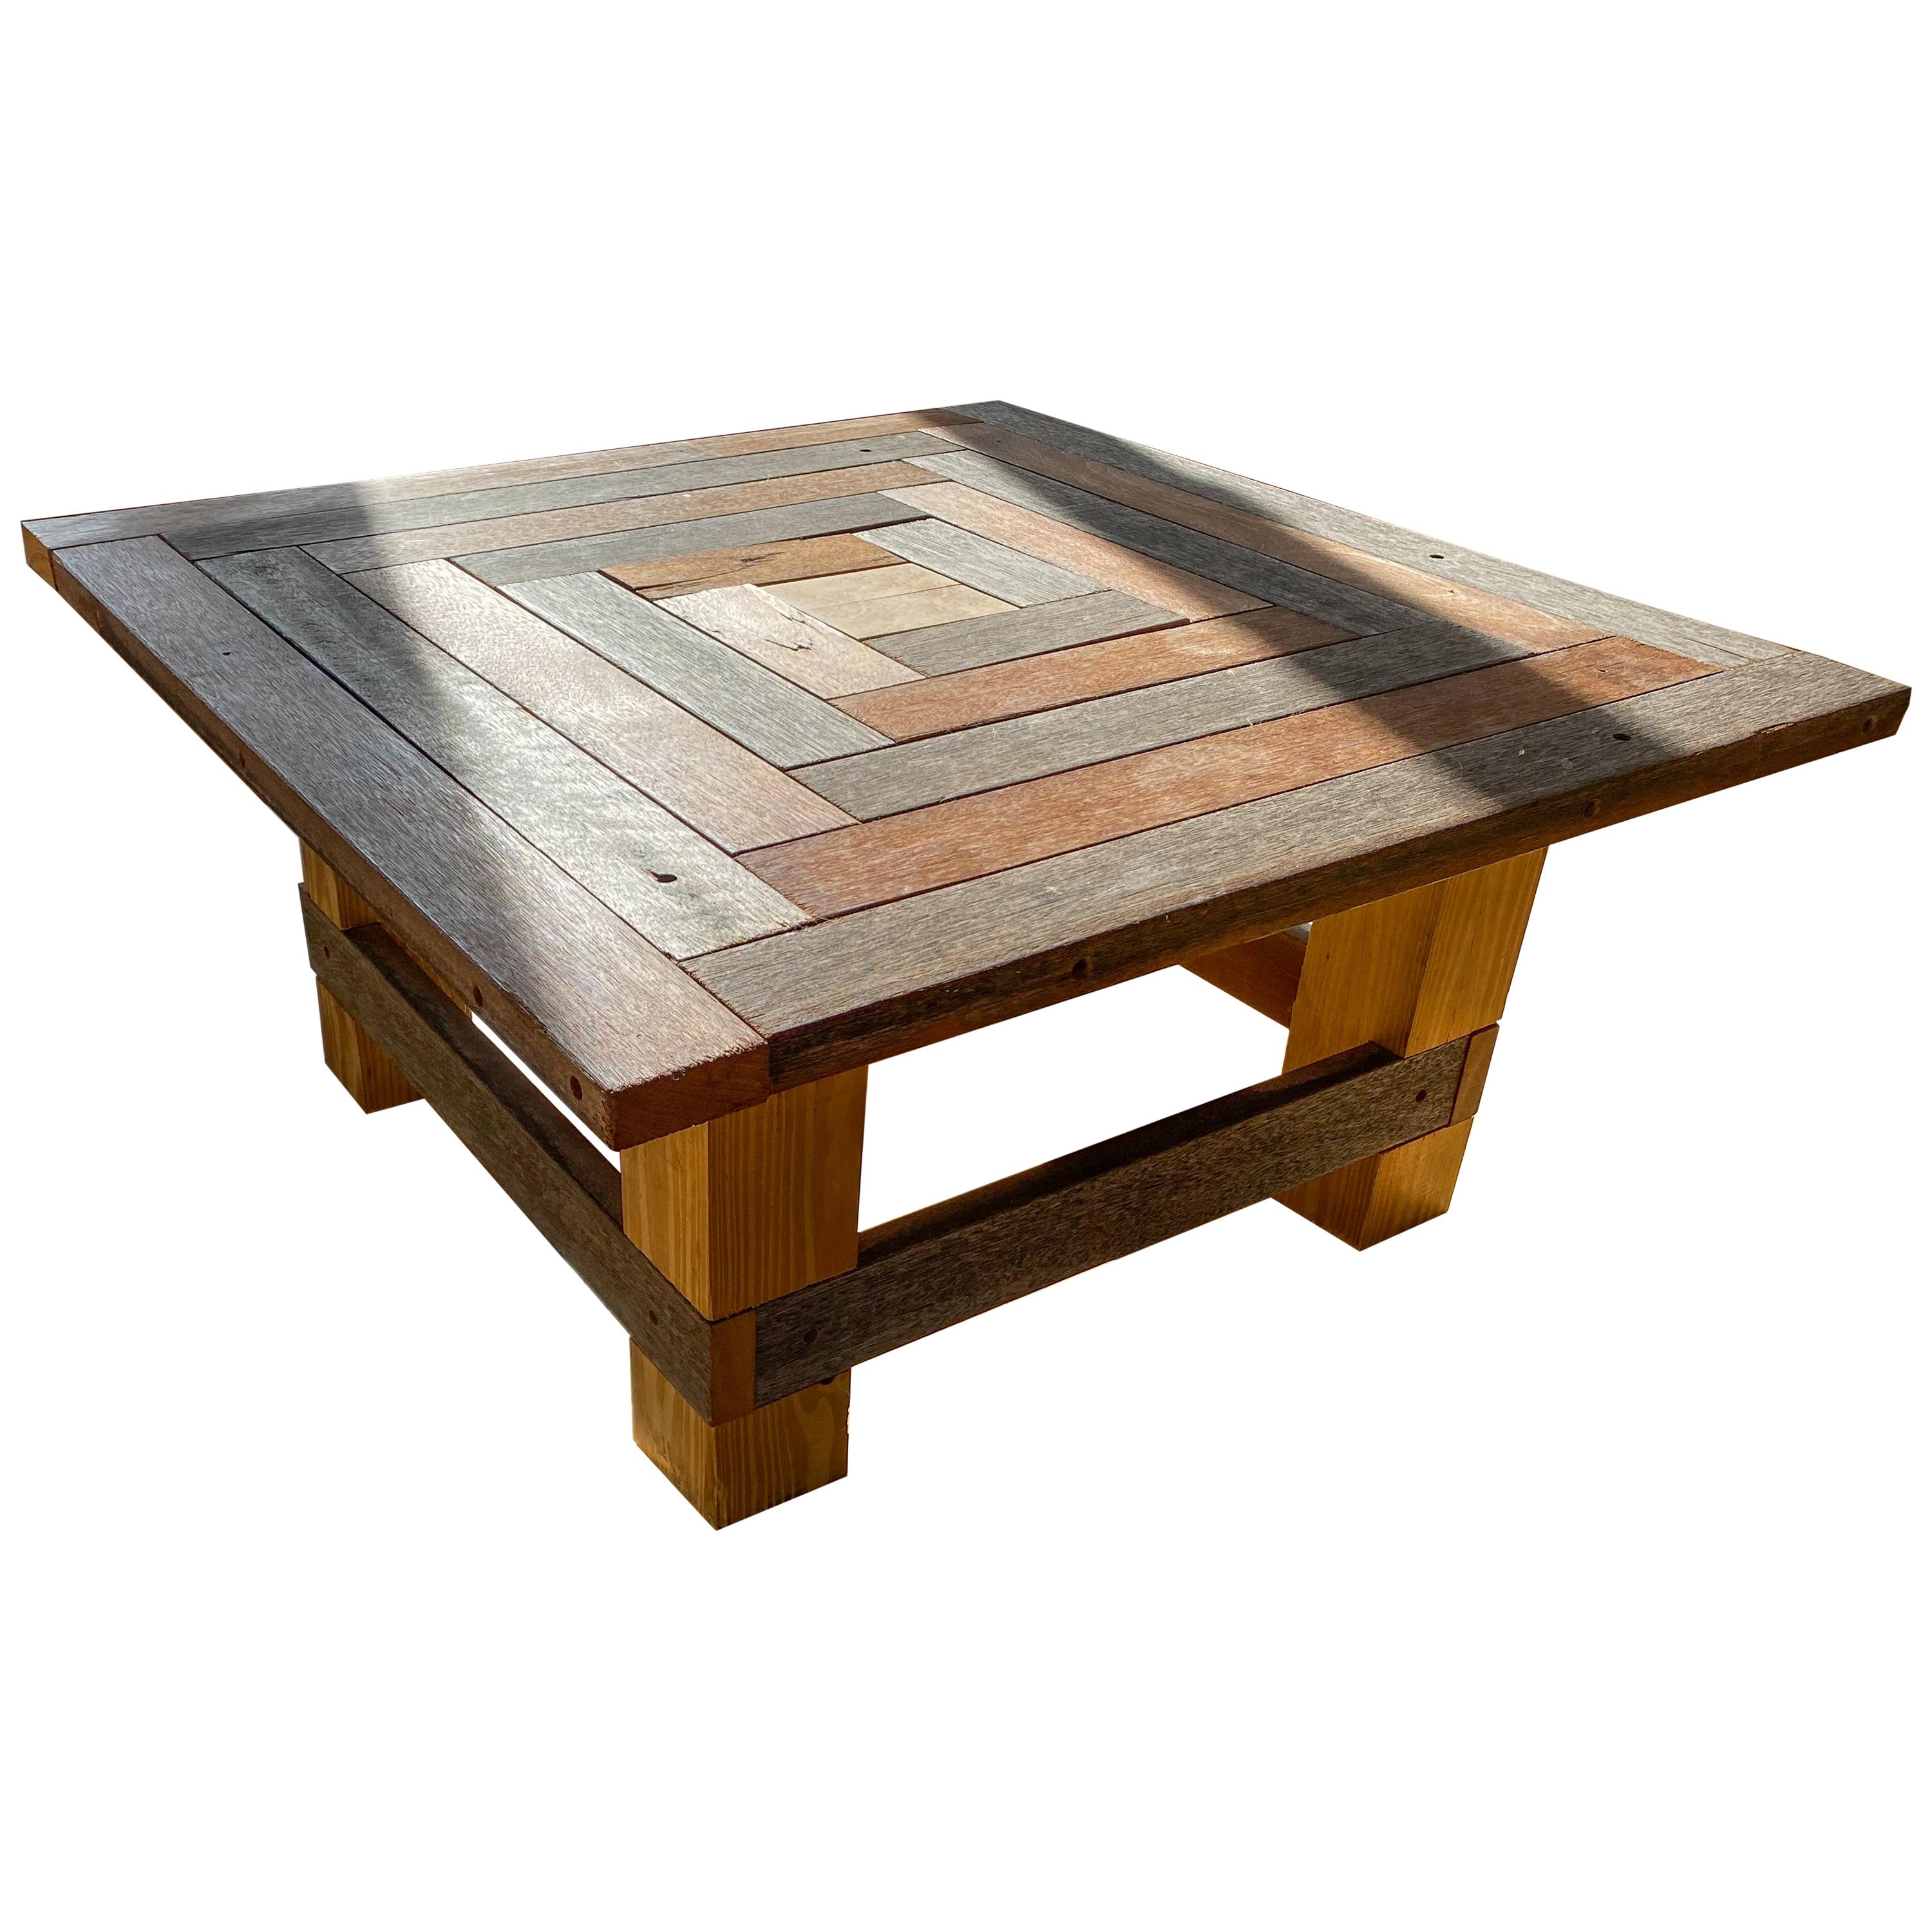 Geometric Square Rustic Wood Coffee Table